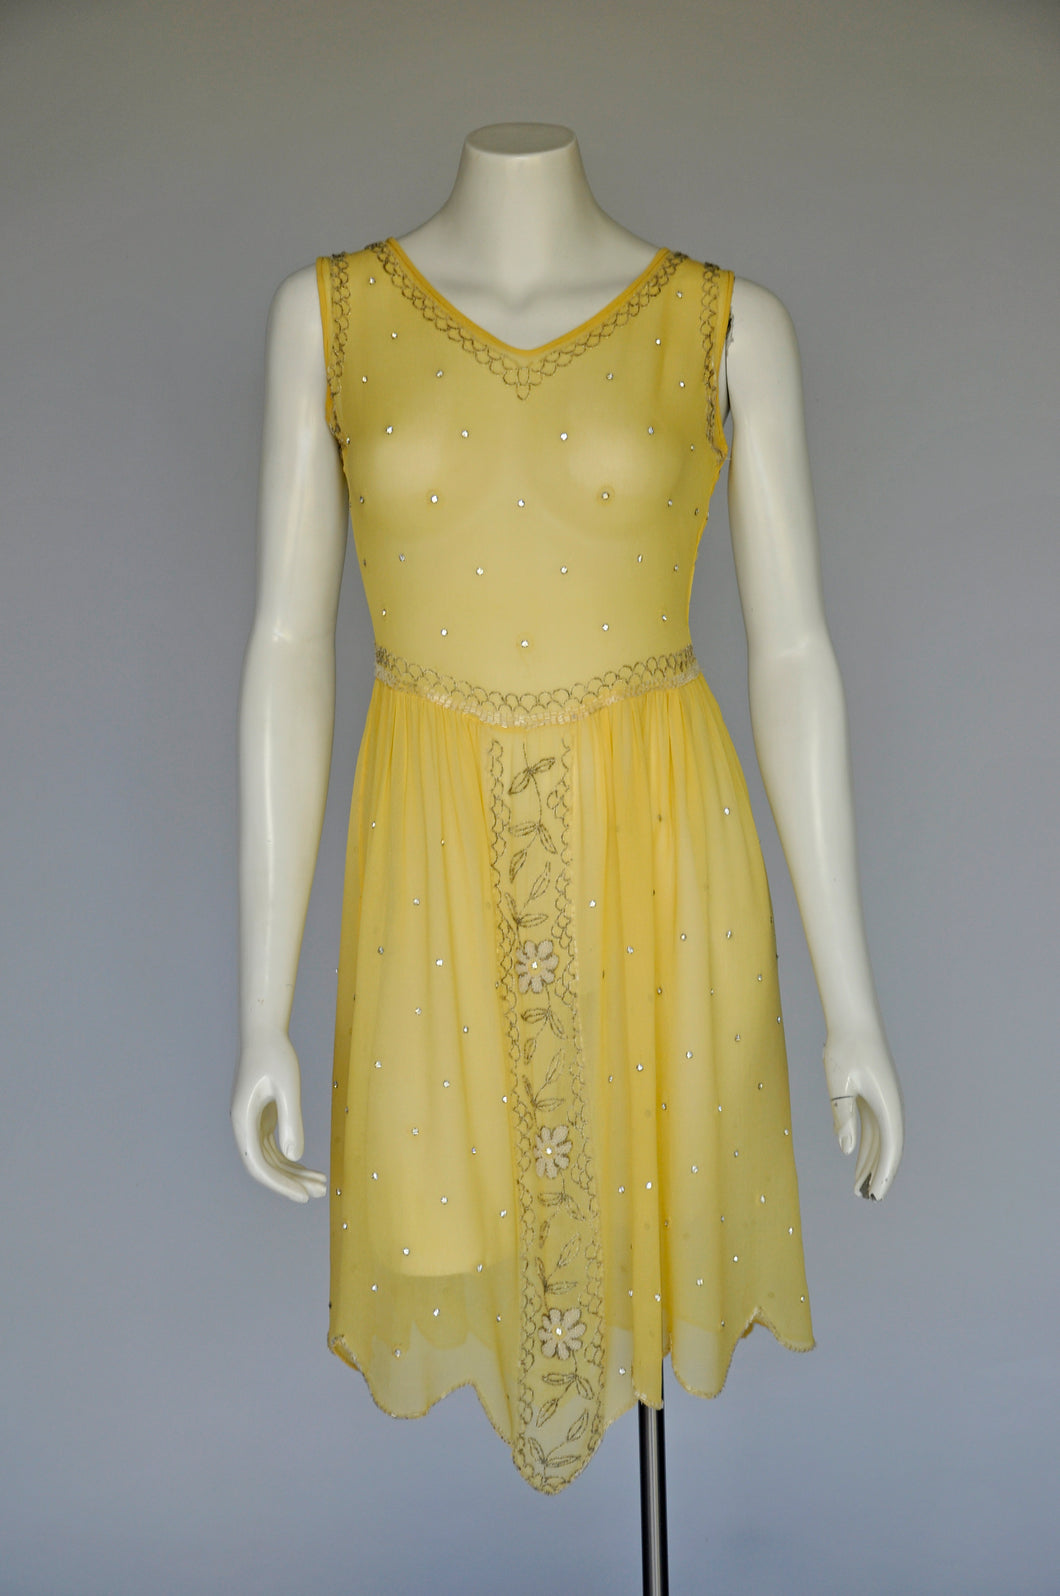 vintage 1920s yellow beaded shift dress XS